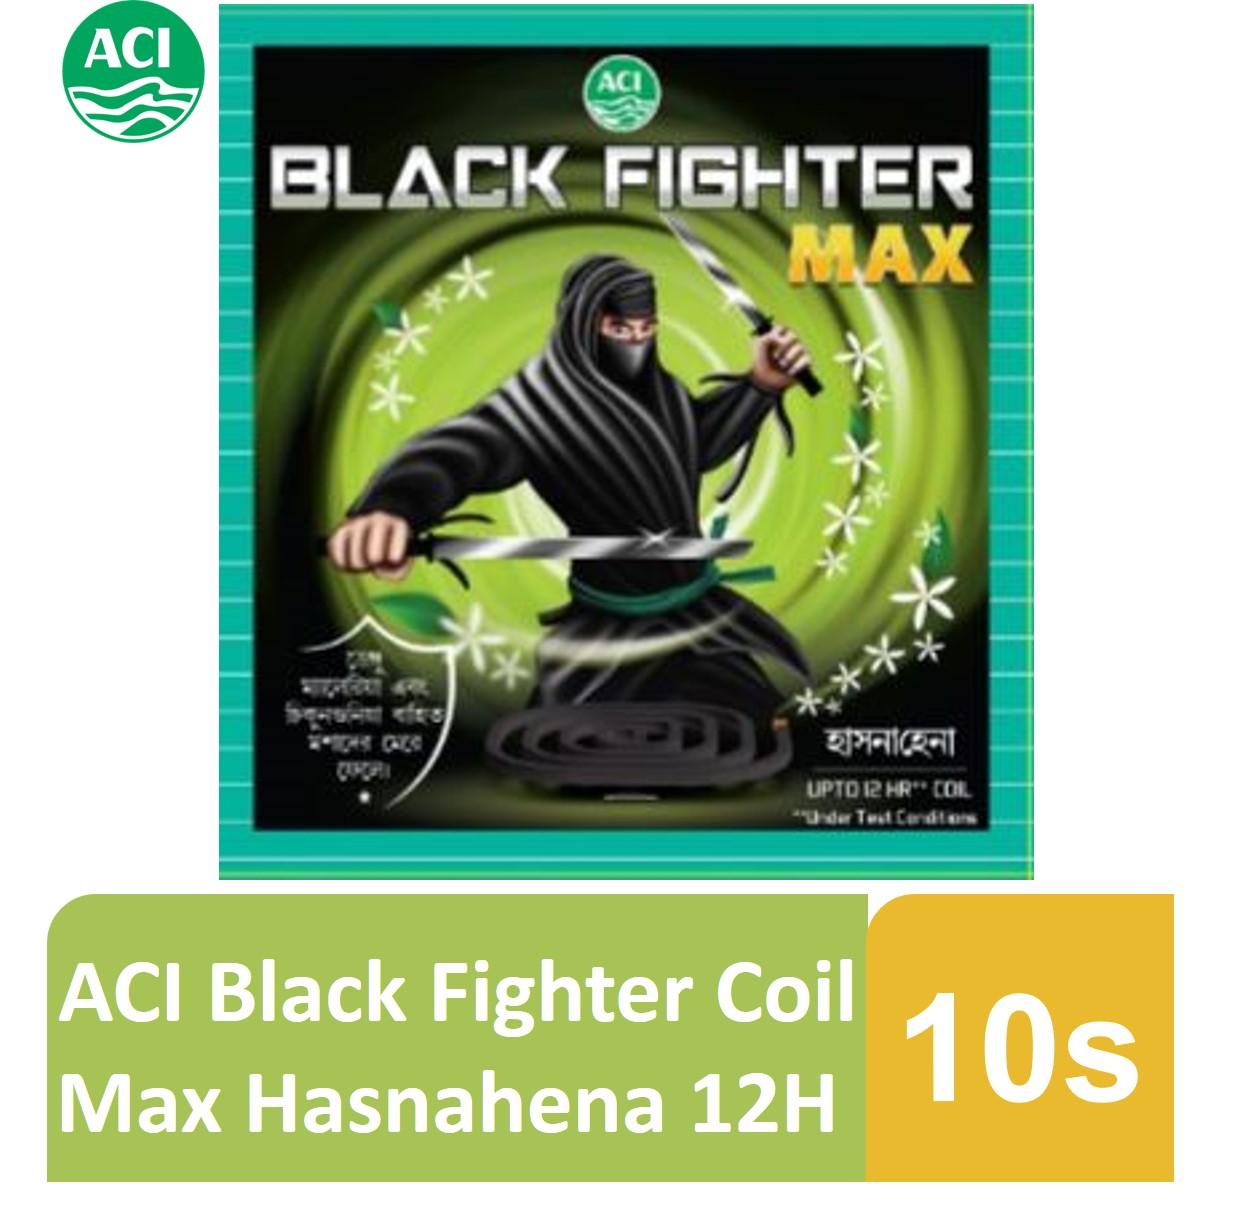 ACI Black Fighter Coil Max Hasnahena12 HR